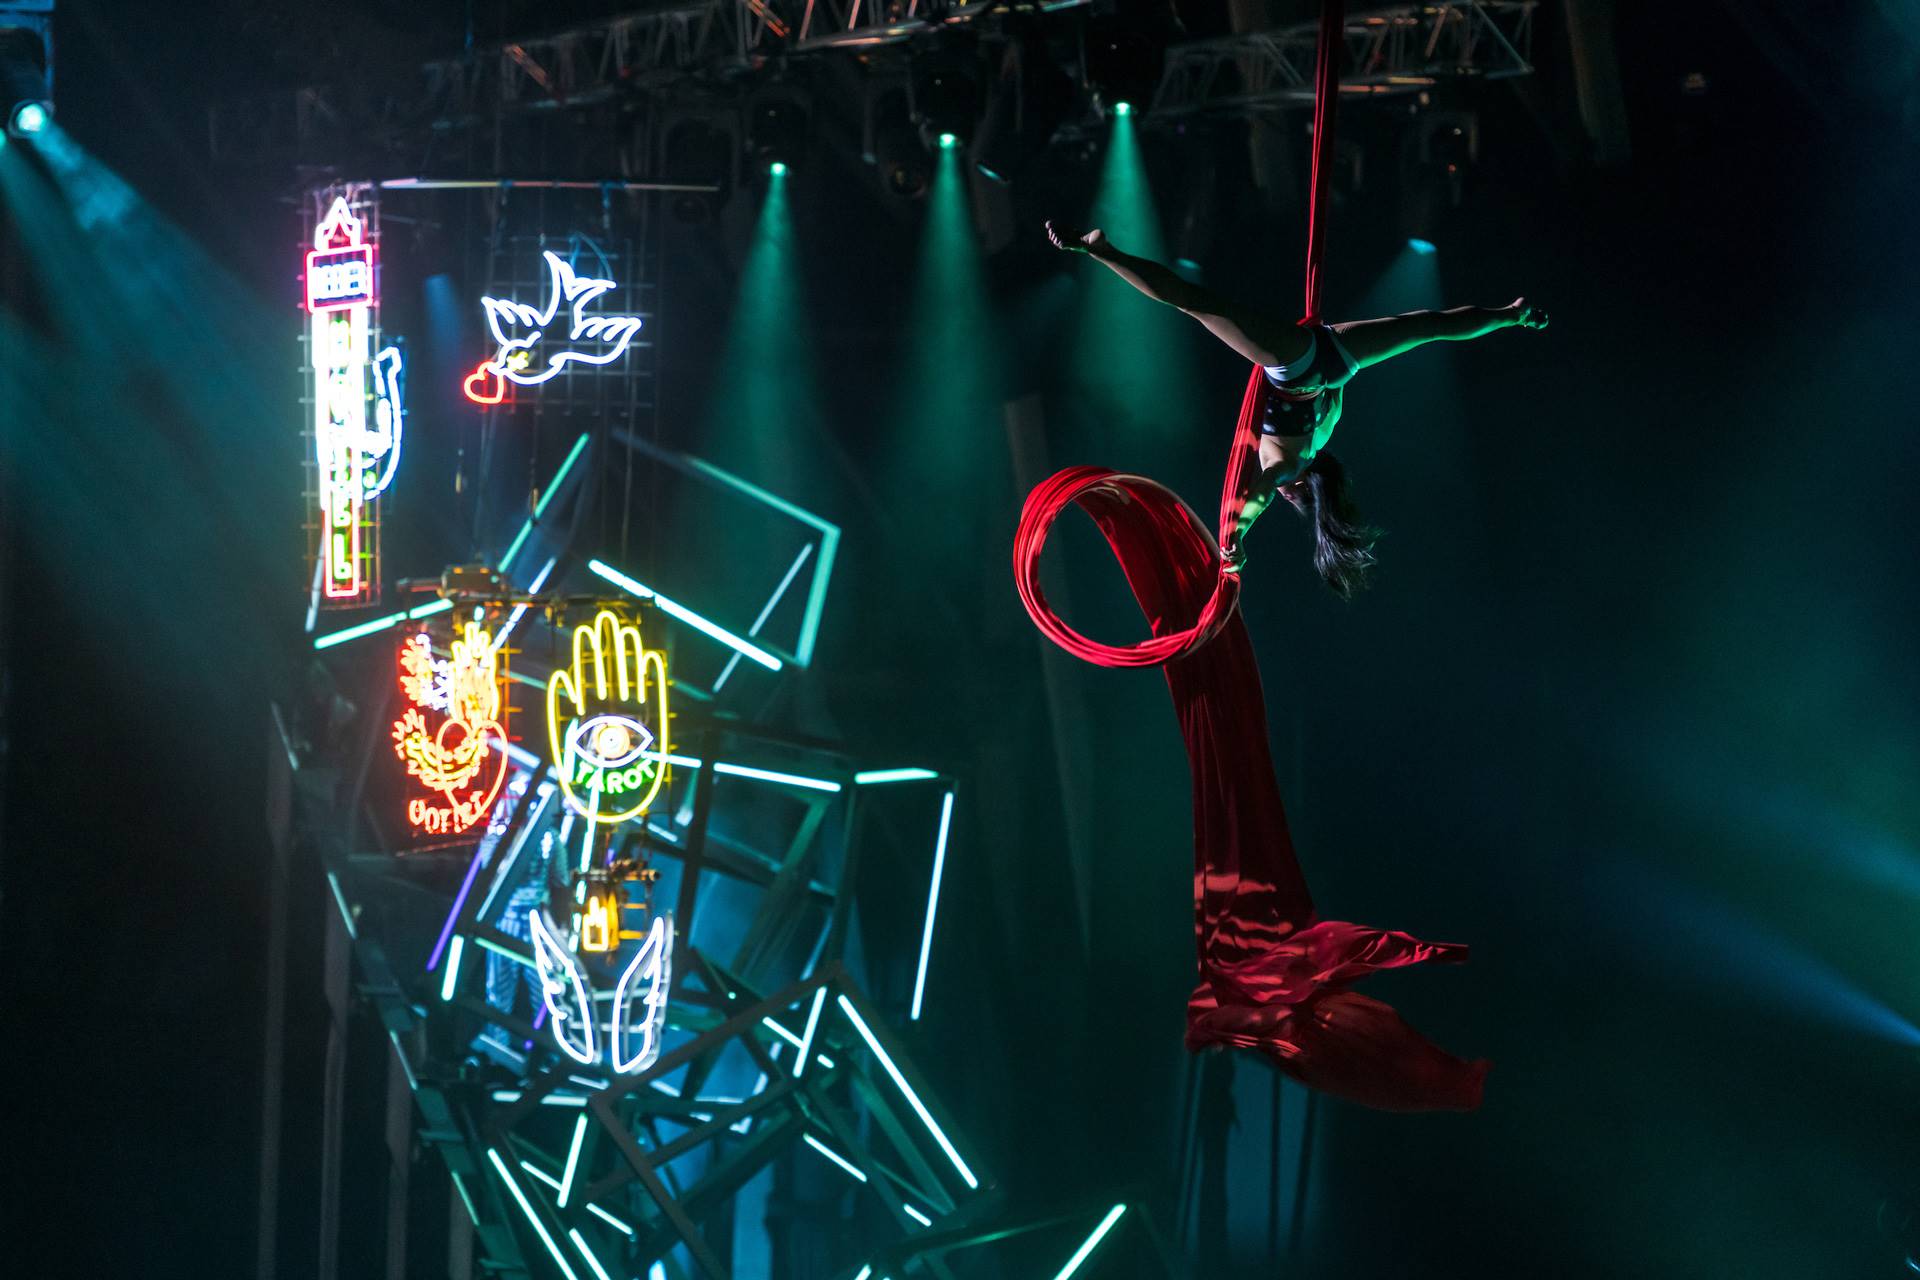 Rebel by Cirque du Soleil 2019: Set and aerial acrobatics 